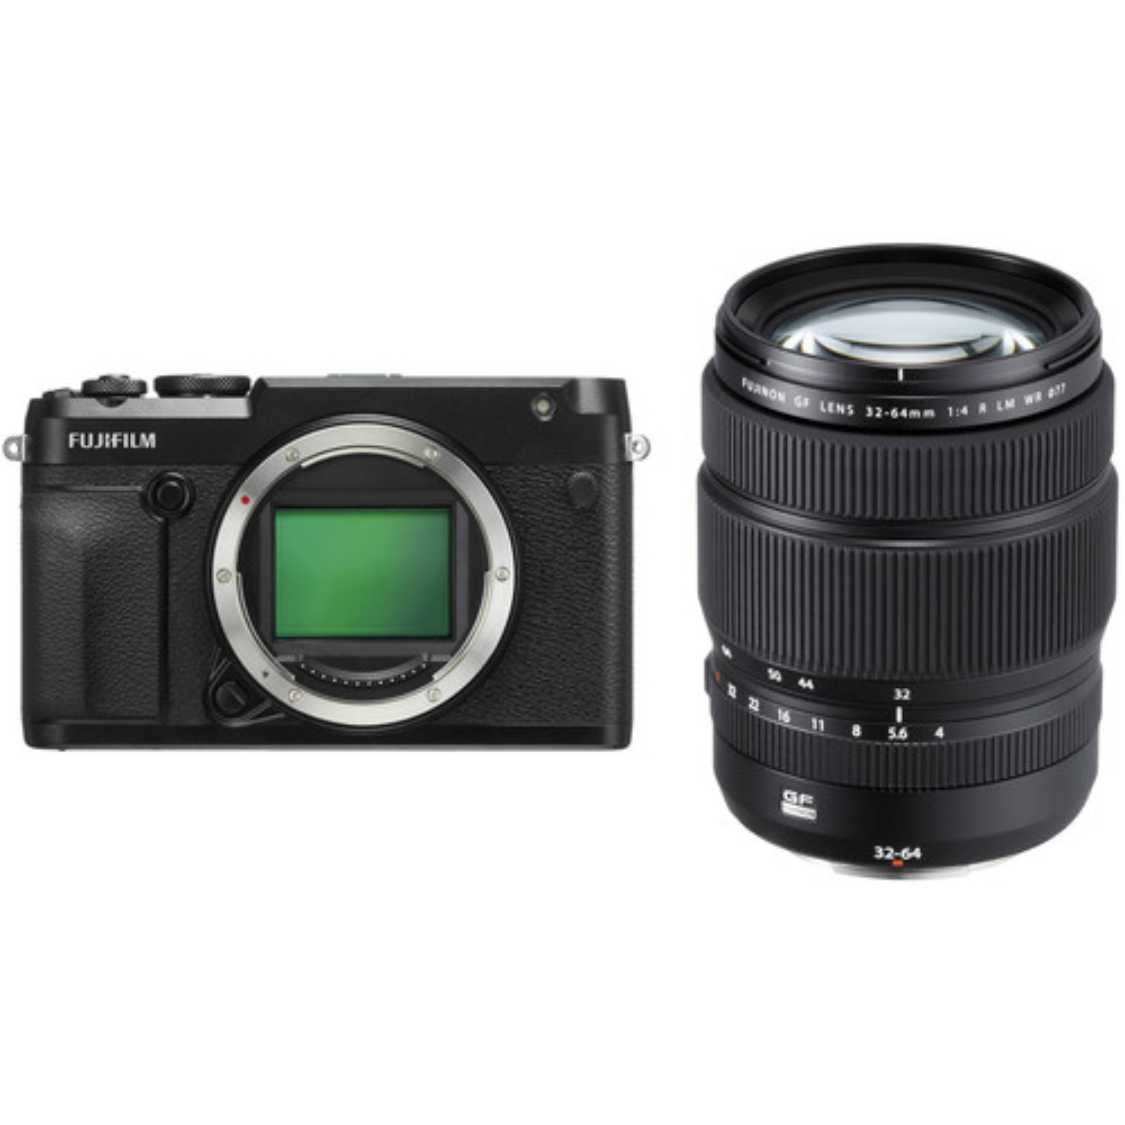 Download Fujifilm GFX 50R Body and 32-64mm Lens | McBain Camera